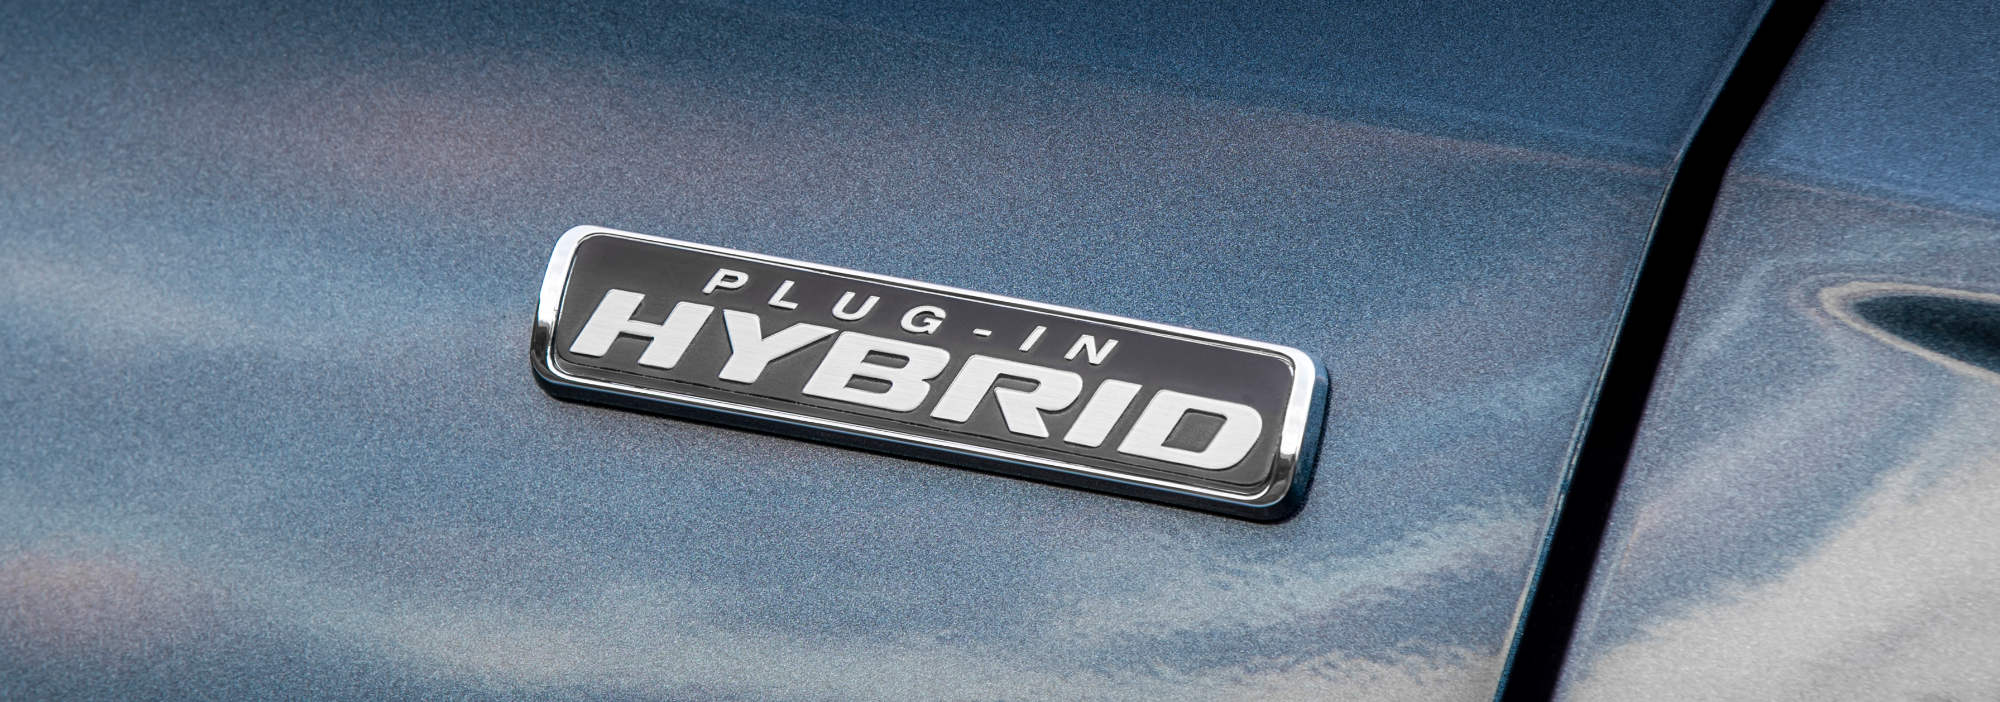 Plug-in hybrid emblem Kuga